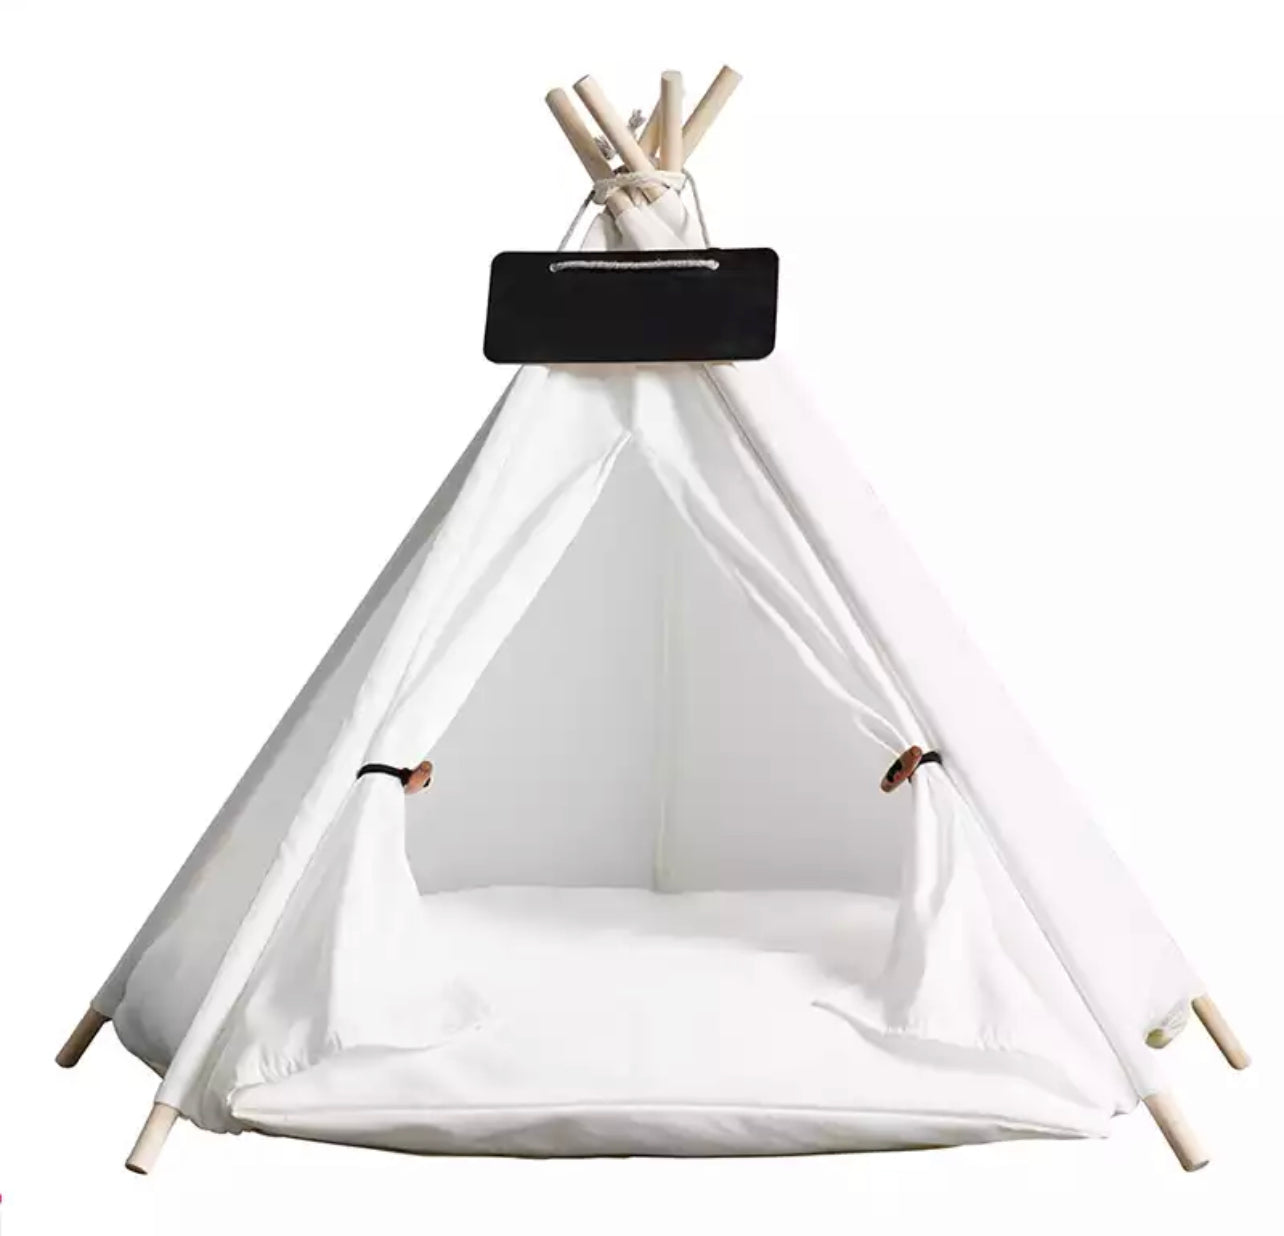 TeePee Dog Tent - White